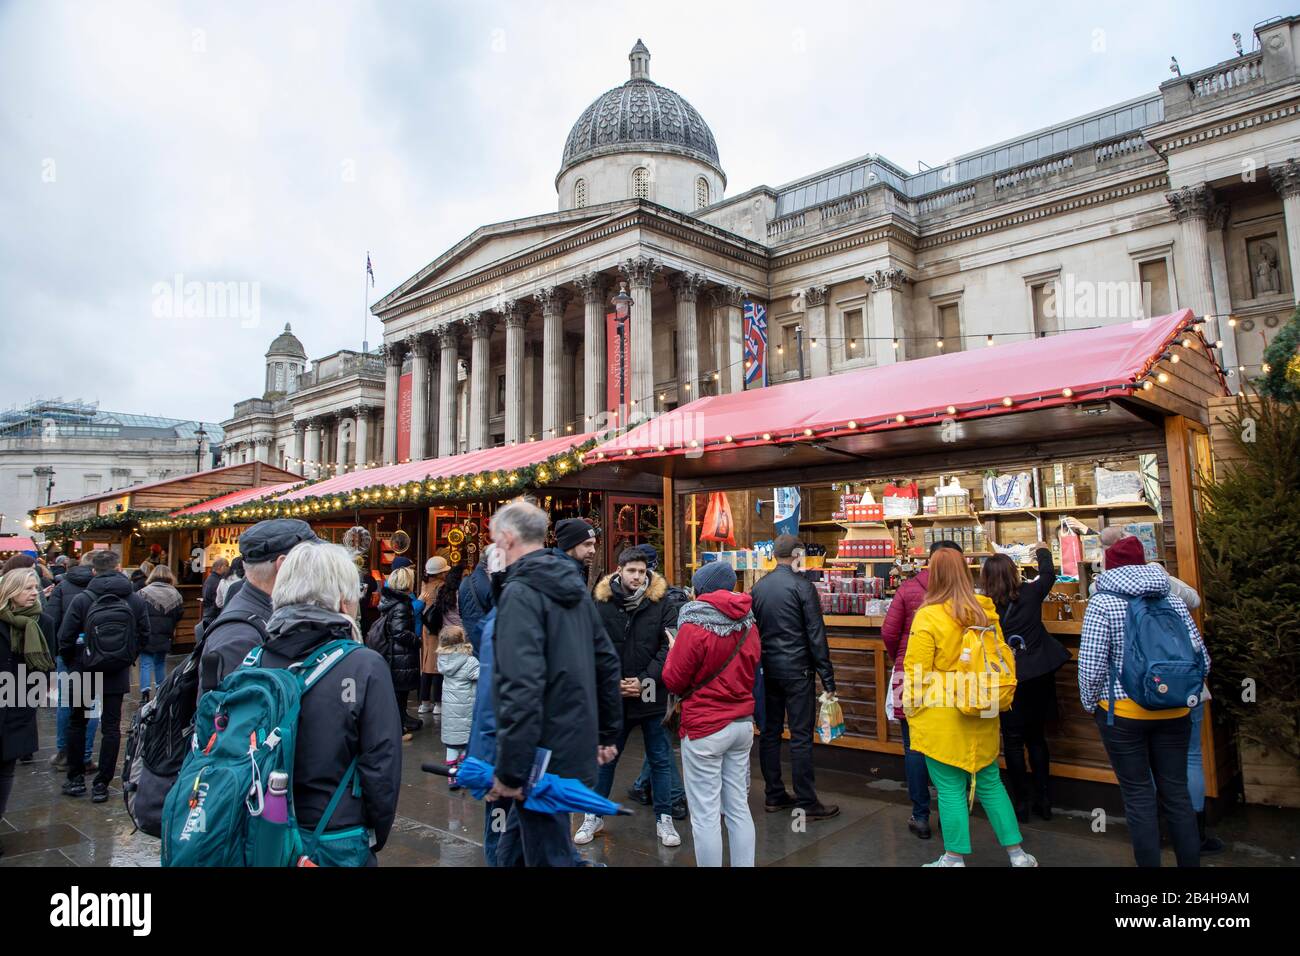 Christmas Market at the National Gallery, Trafalgar Square, London, United Kingdom, Stock Photo